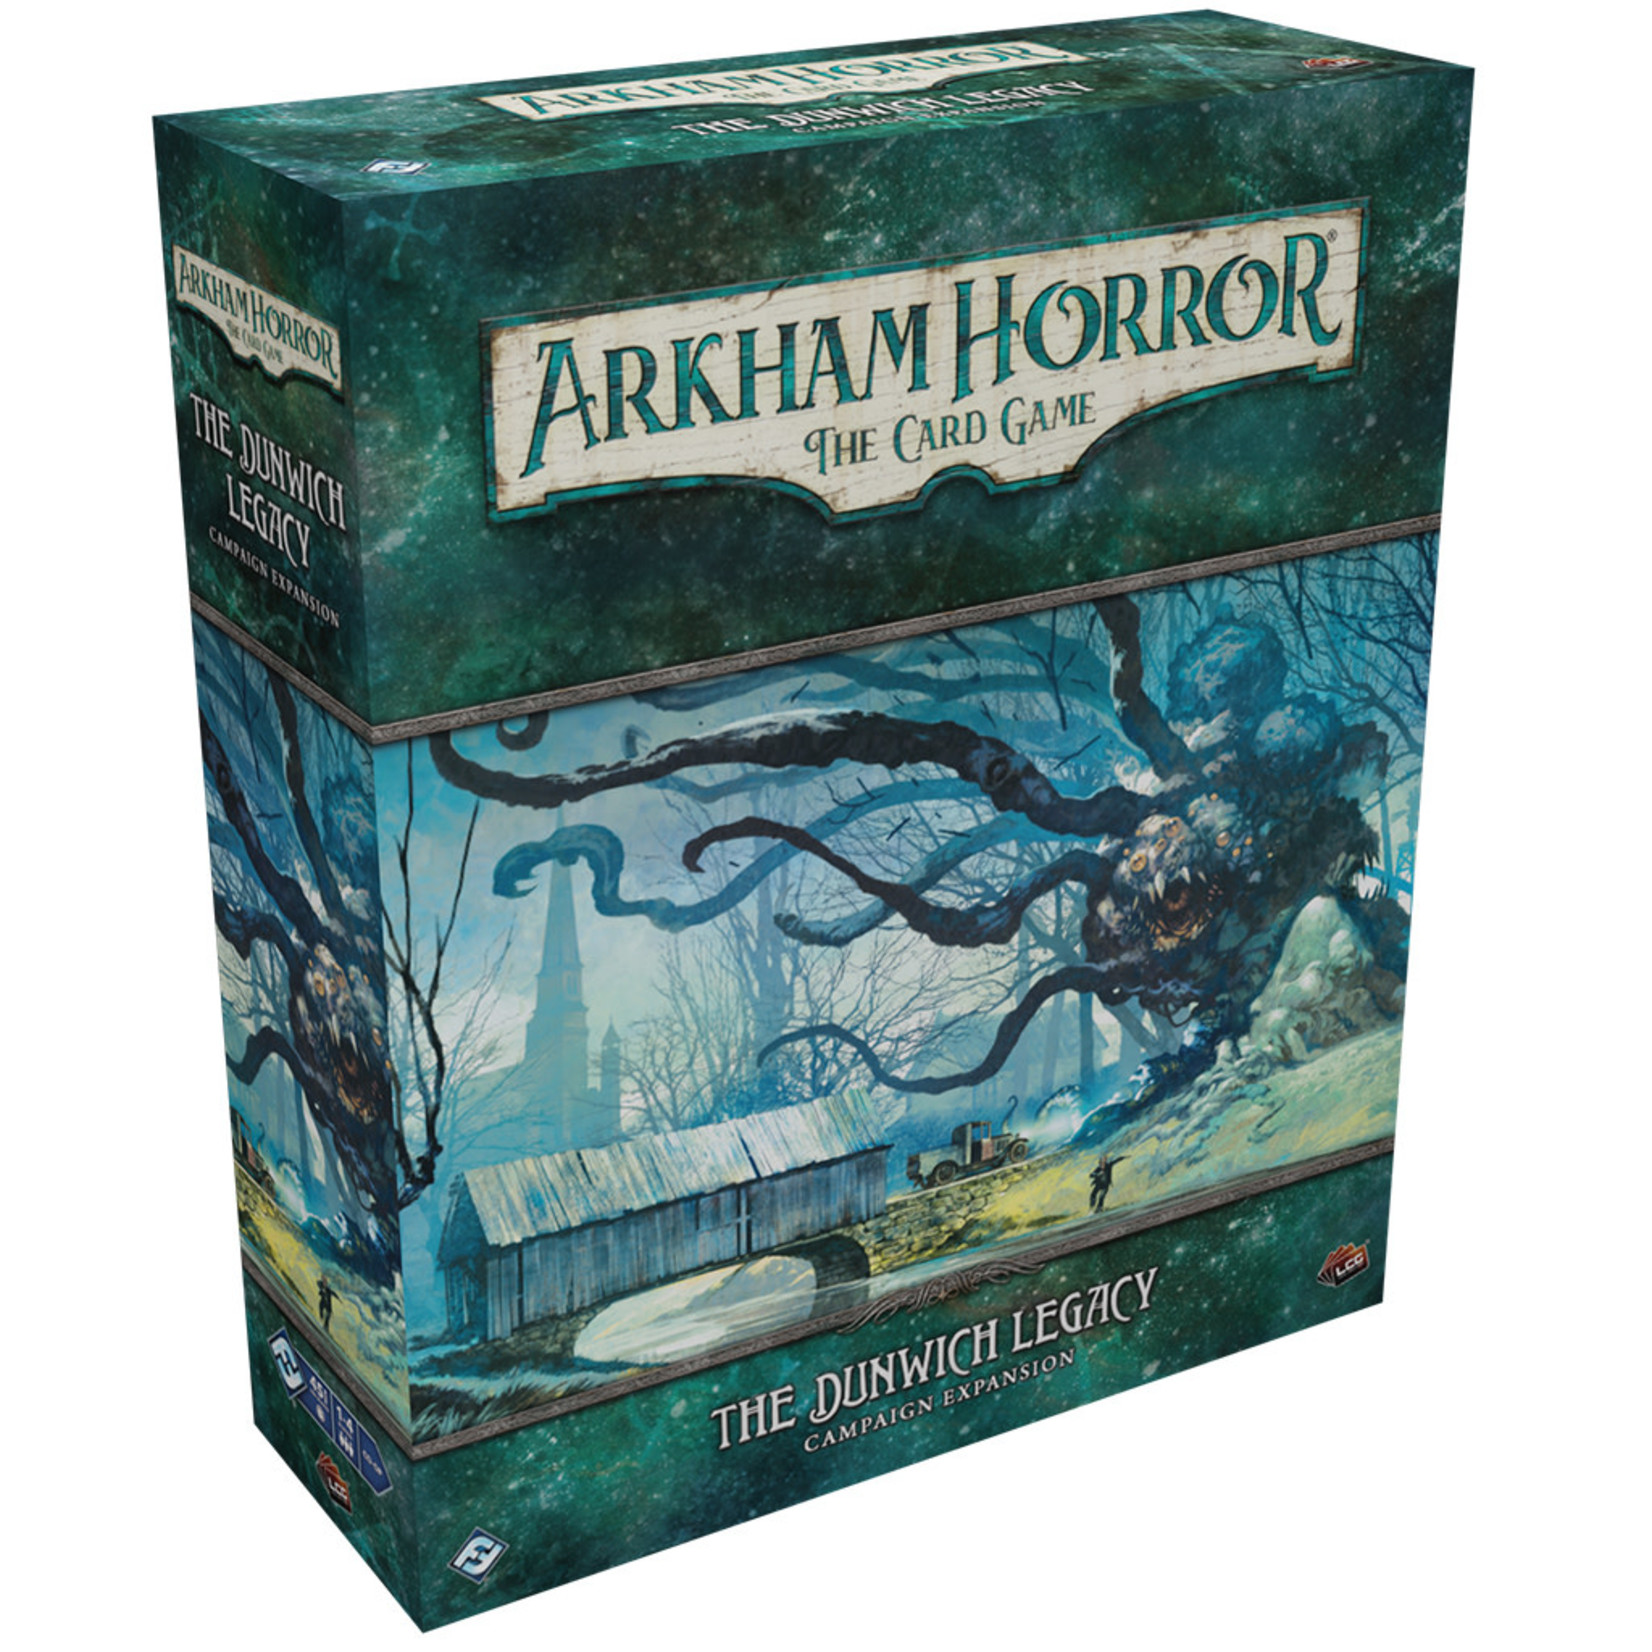 Arkham Horror LCG: The Dunwich Legacy Campaign Expansion Complete Set